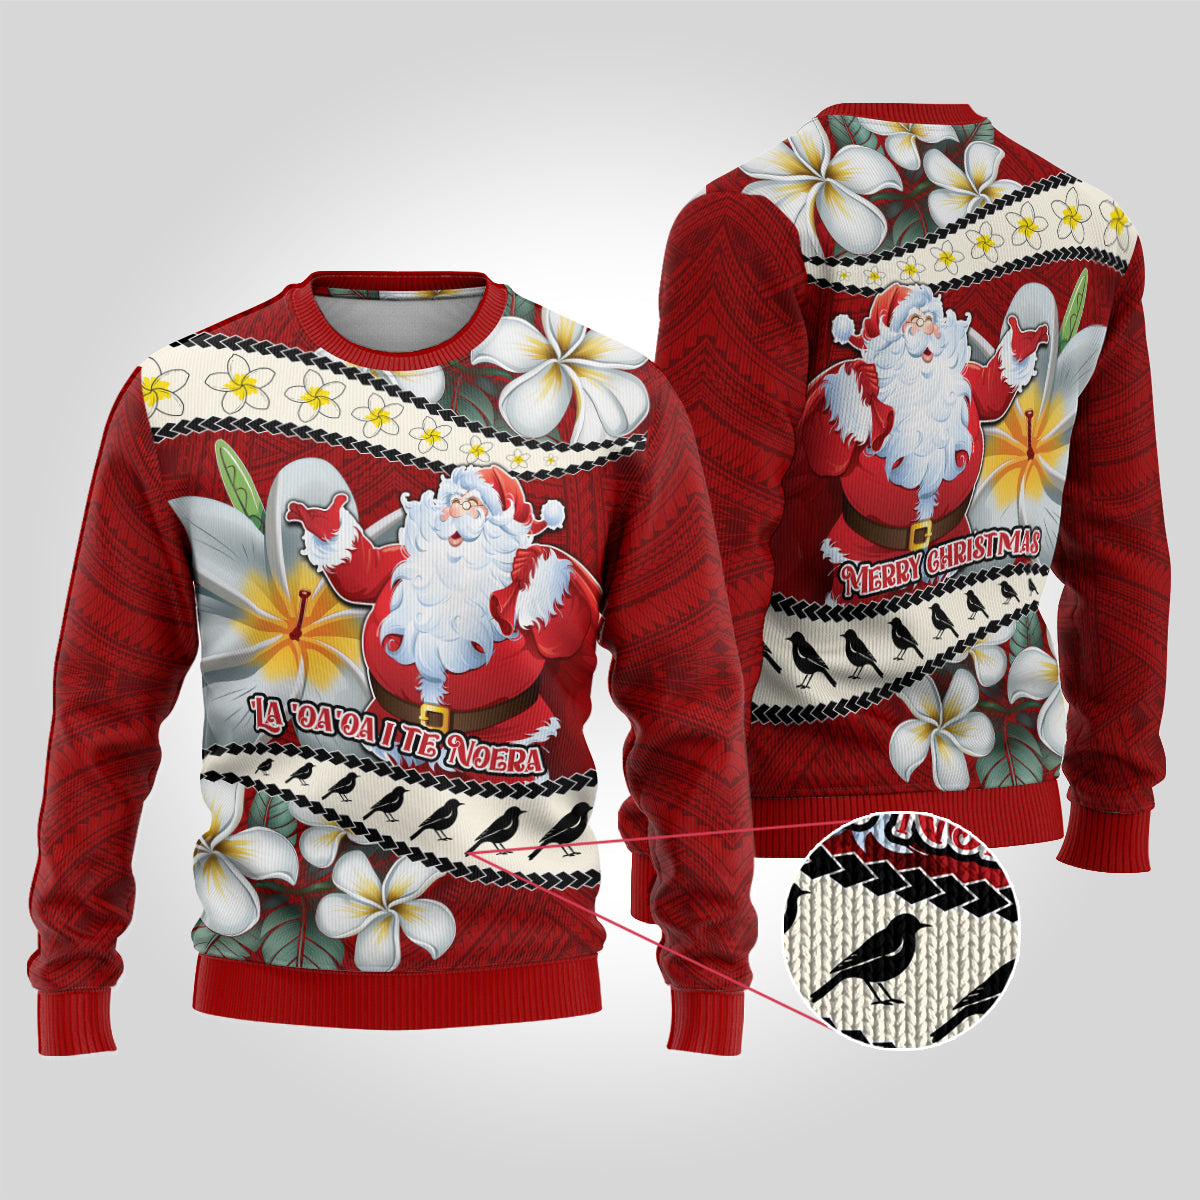 Tahiti Christmas Ugly Christmas Sweater Tiare Flowers and Pomarea Nigra with Polynesian Pattern LT03 Red - Polynesian Pride